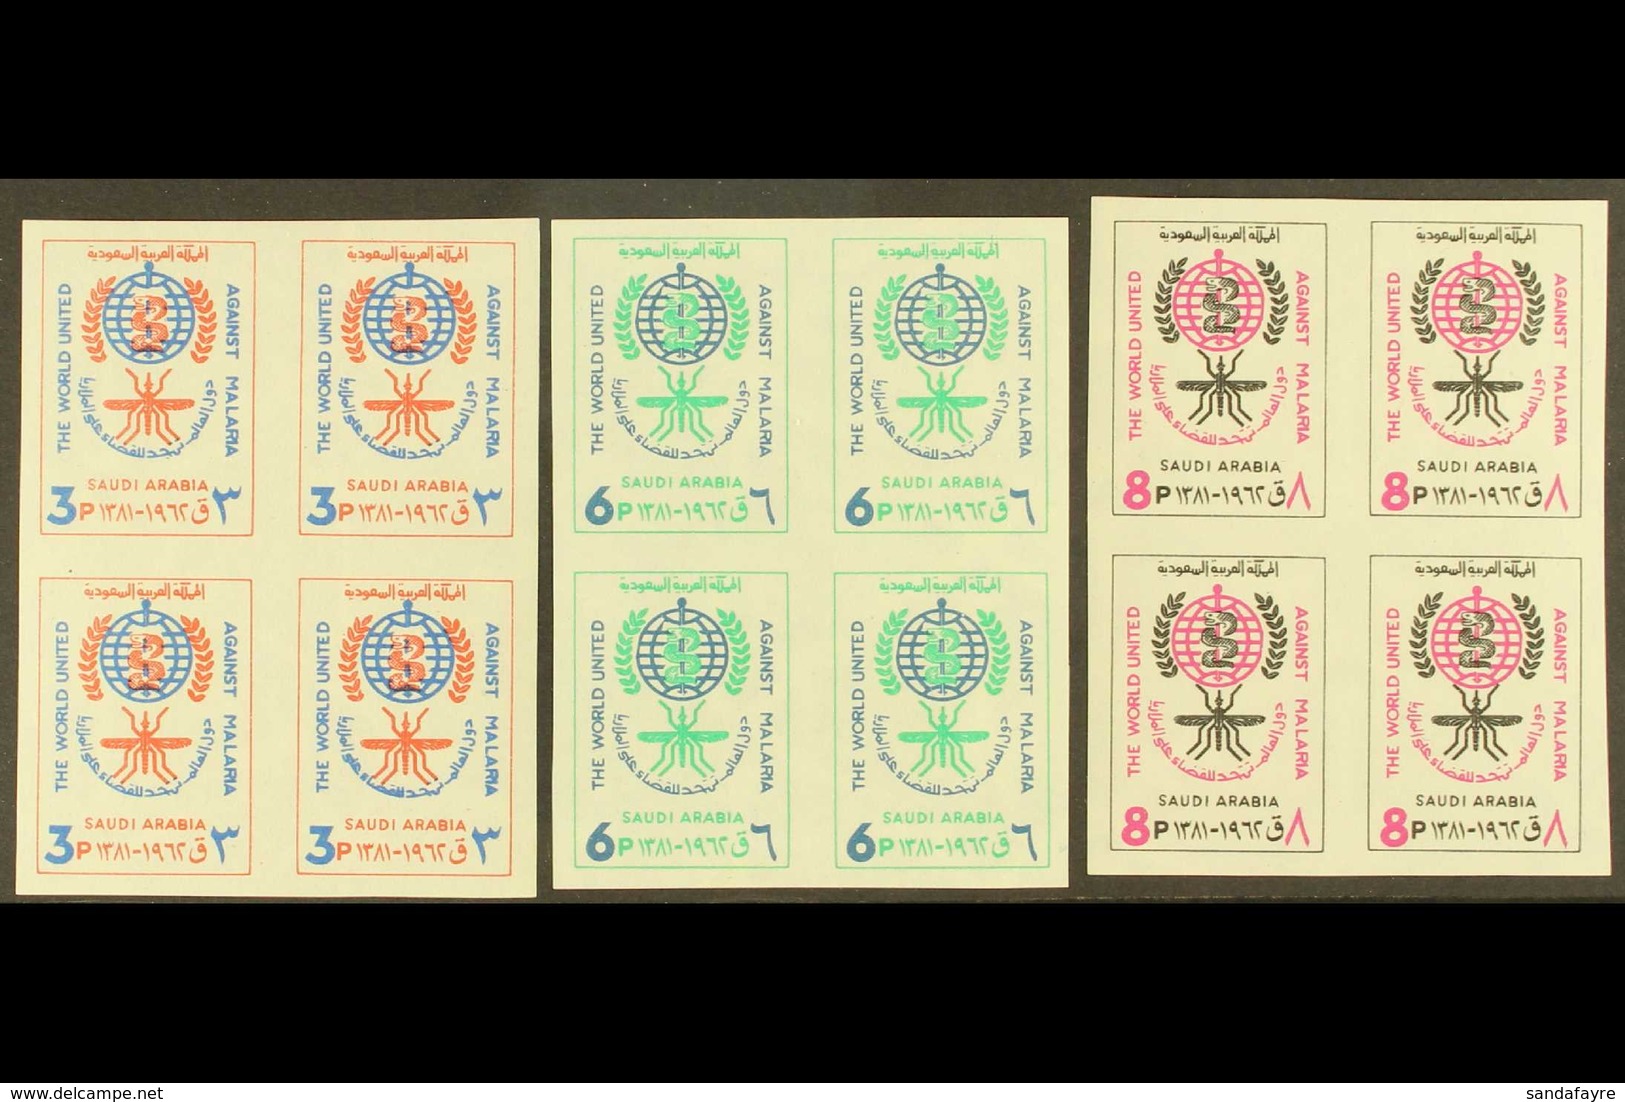 1962 Malaria Eradication Set Complete, In Imperf Blocks Of 4 As SG 452/4 Var (Mayo 976, 978v, 979), Very Fine Never Hing - Saudi Arabia